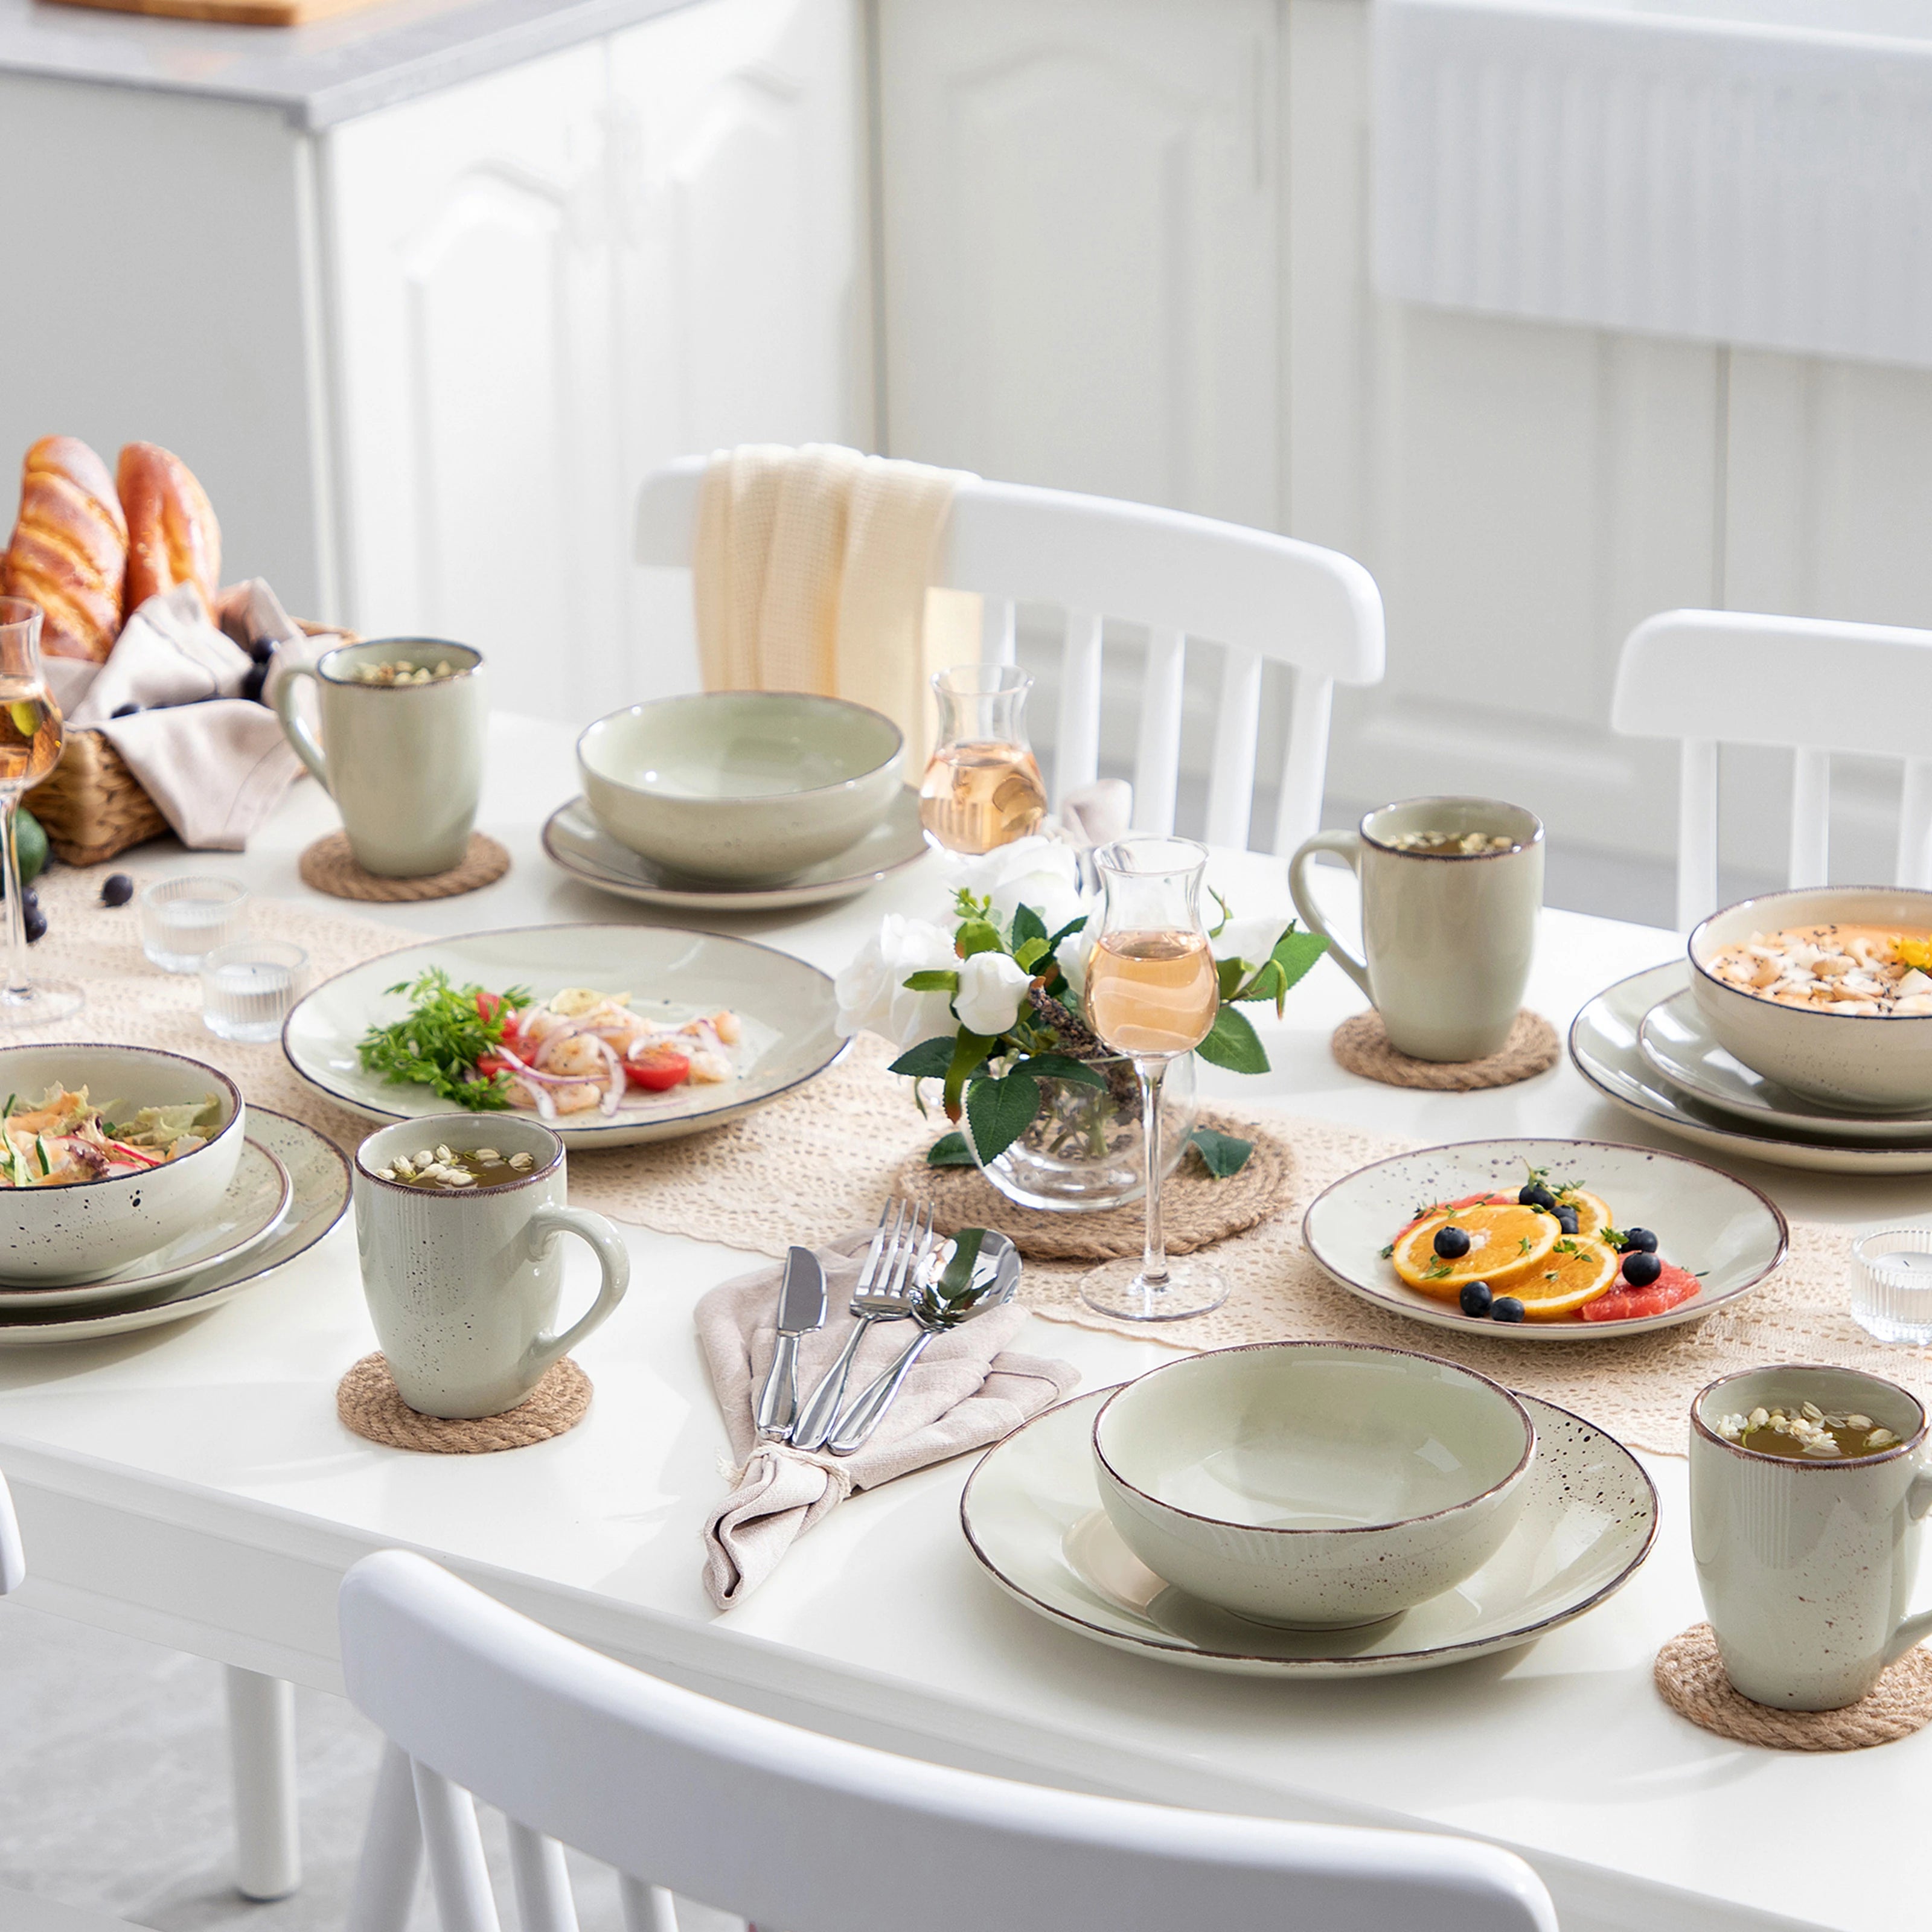 Stoneware Ceramic Dinnerware Set with Dinner Plate,Dessert Plate,800ml Bowl, Mug Tableware Set